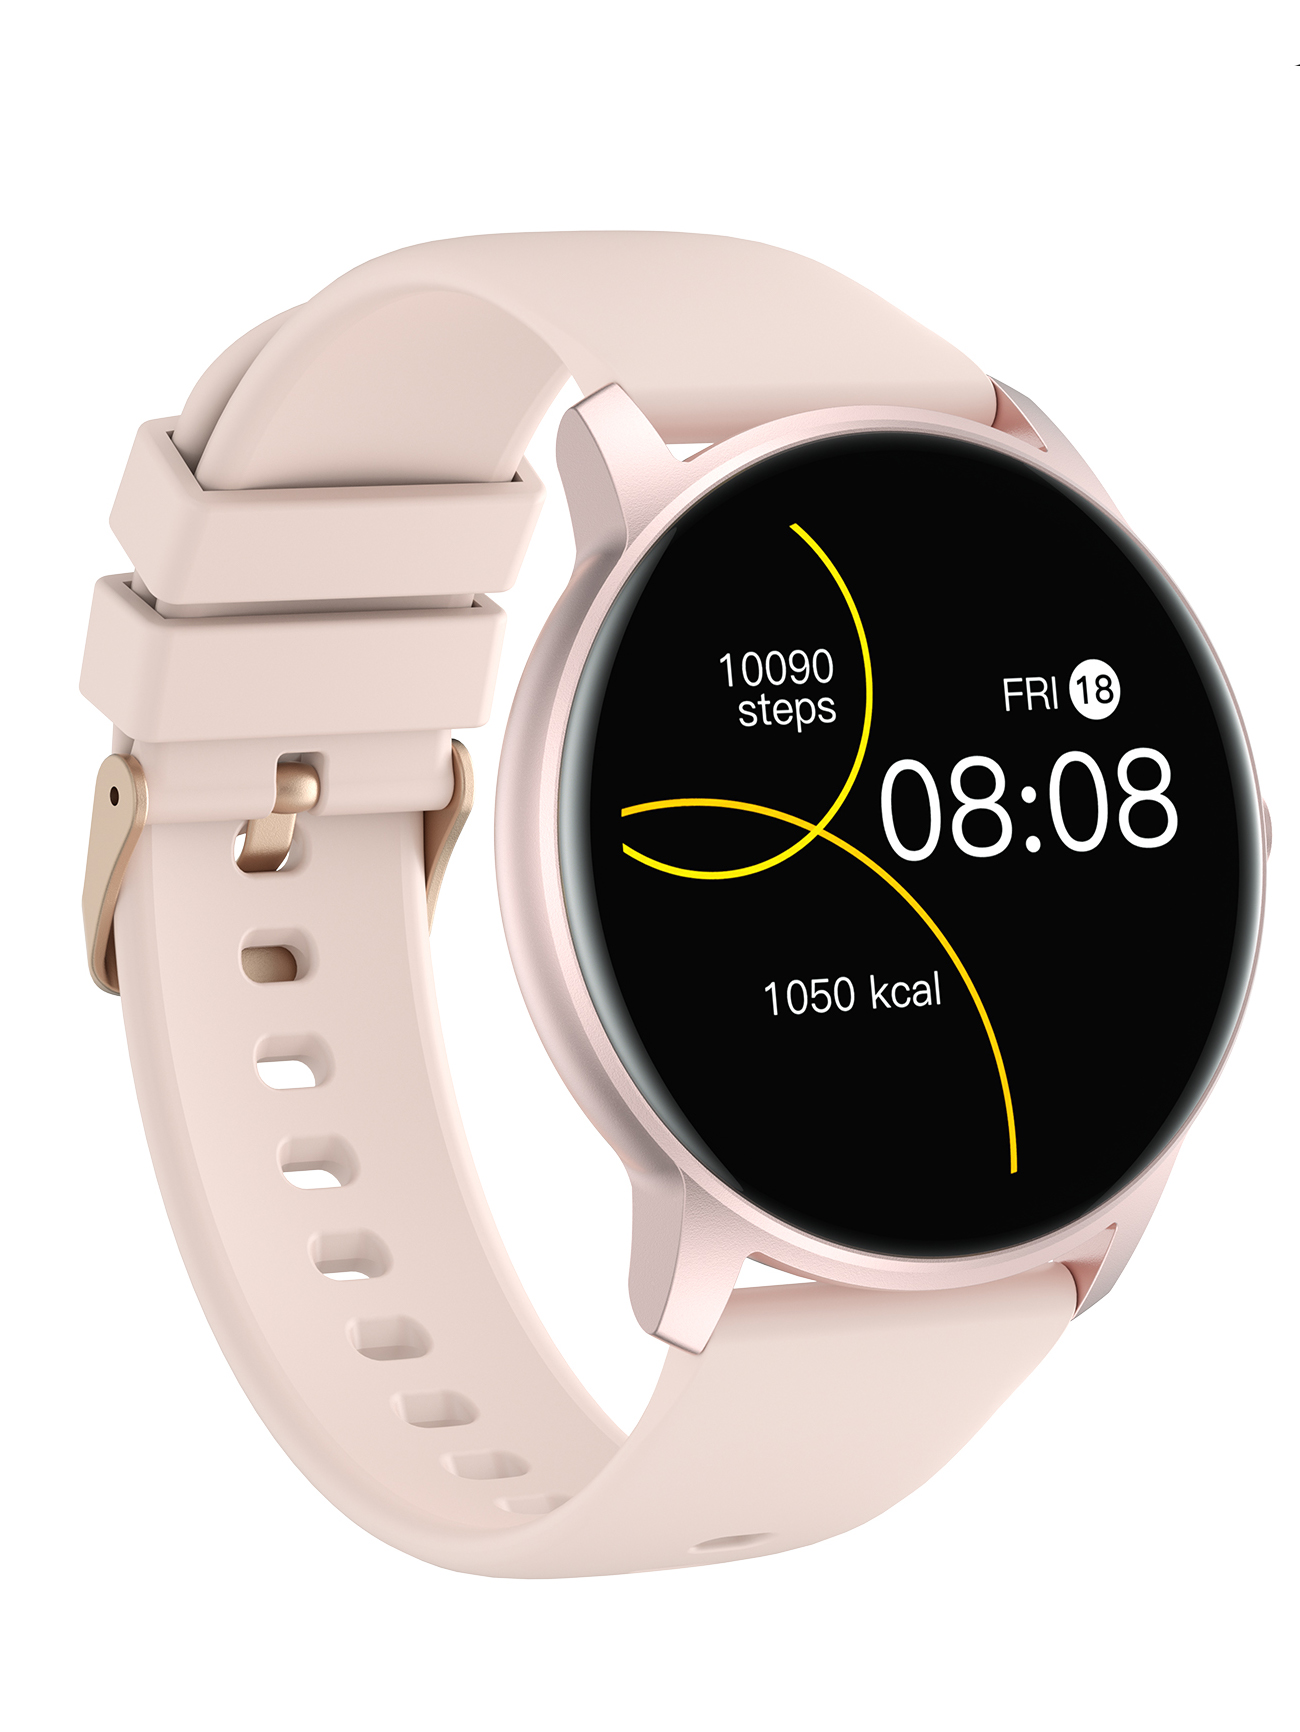 Cмарт-часы Smart Watch KW77